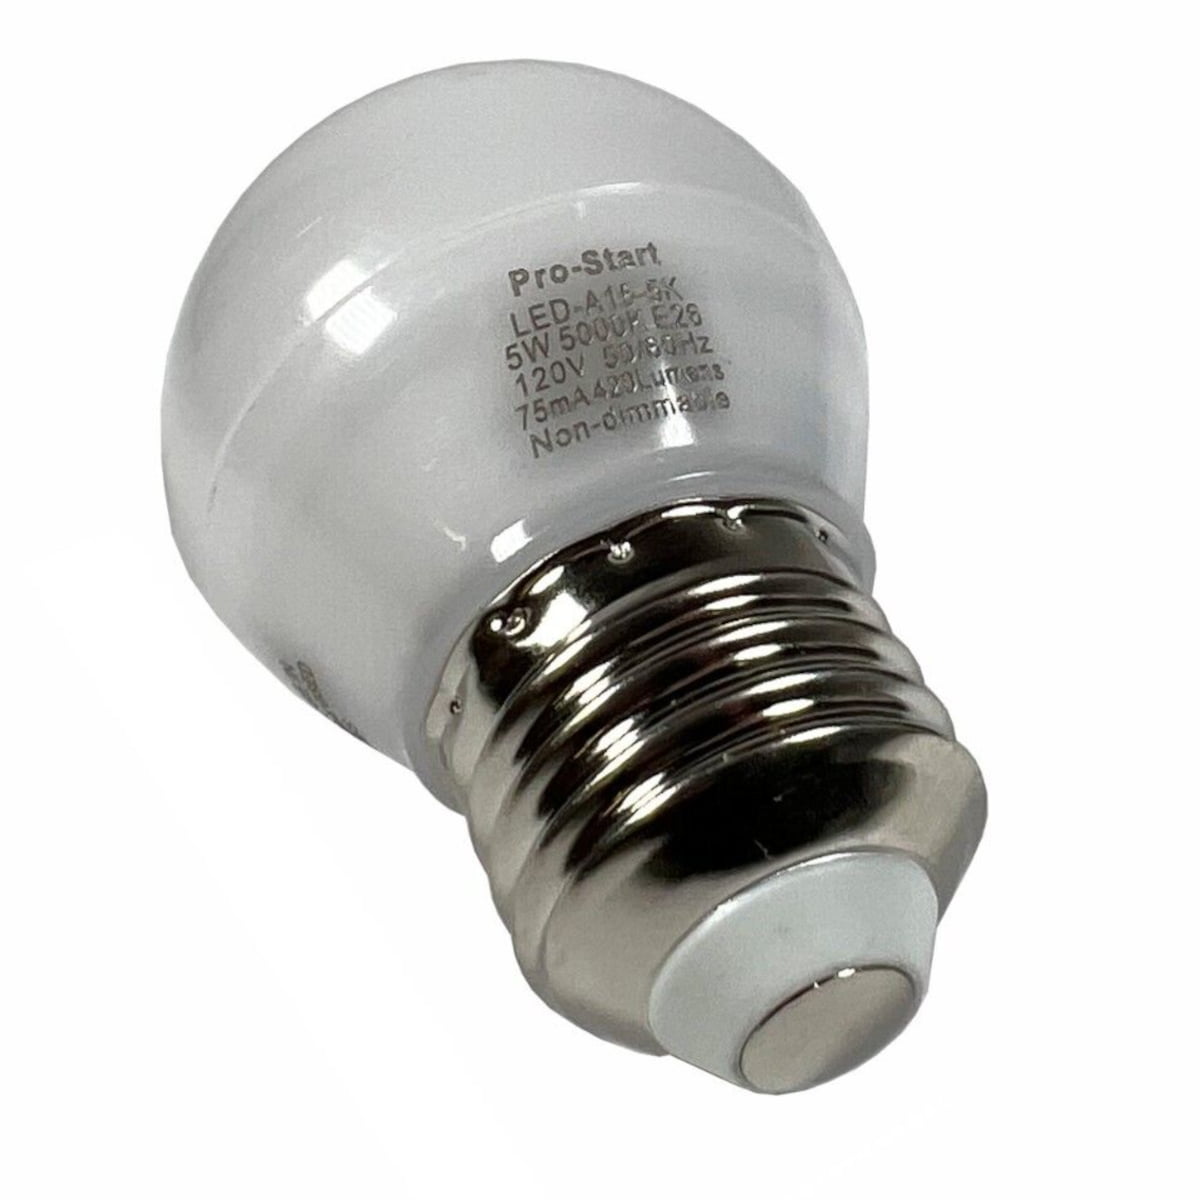 W11107911 Whirlpool Light Bulb